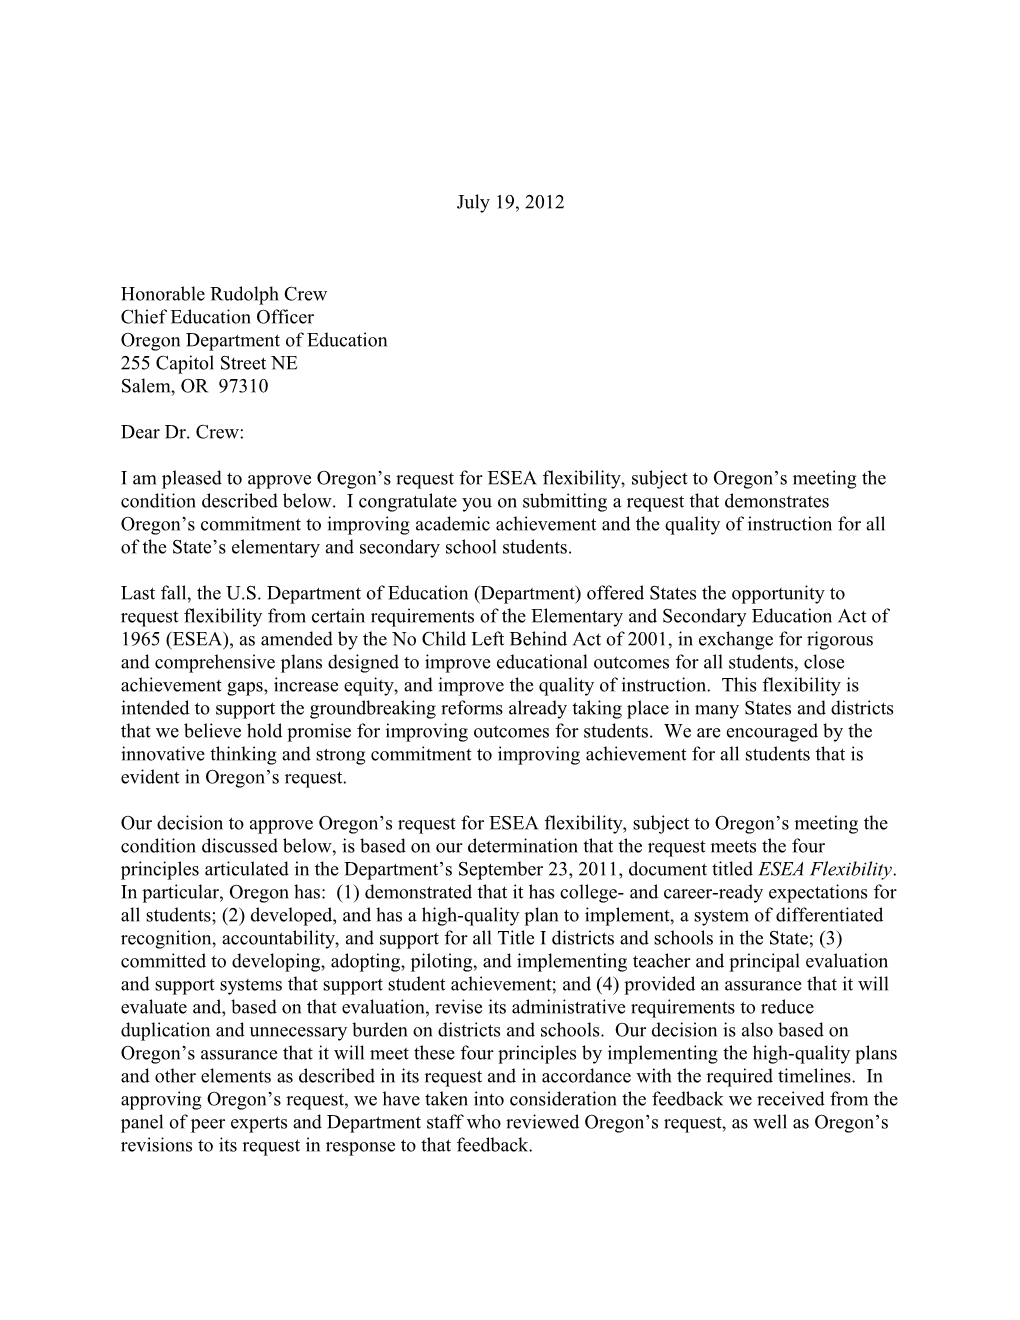 Oregon: ESEA Flexibility Requests, Secretary's Approval Letter July 19, 2012 (MS Word)